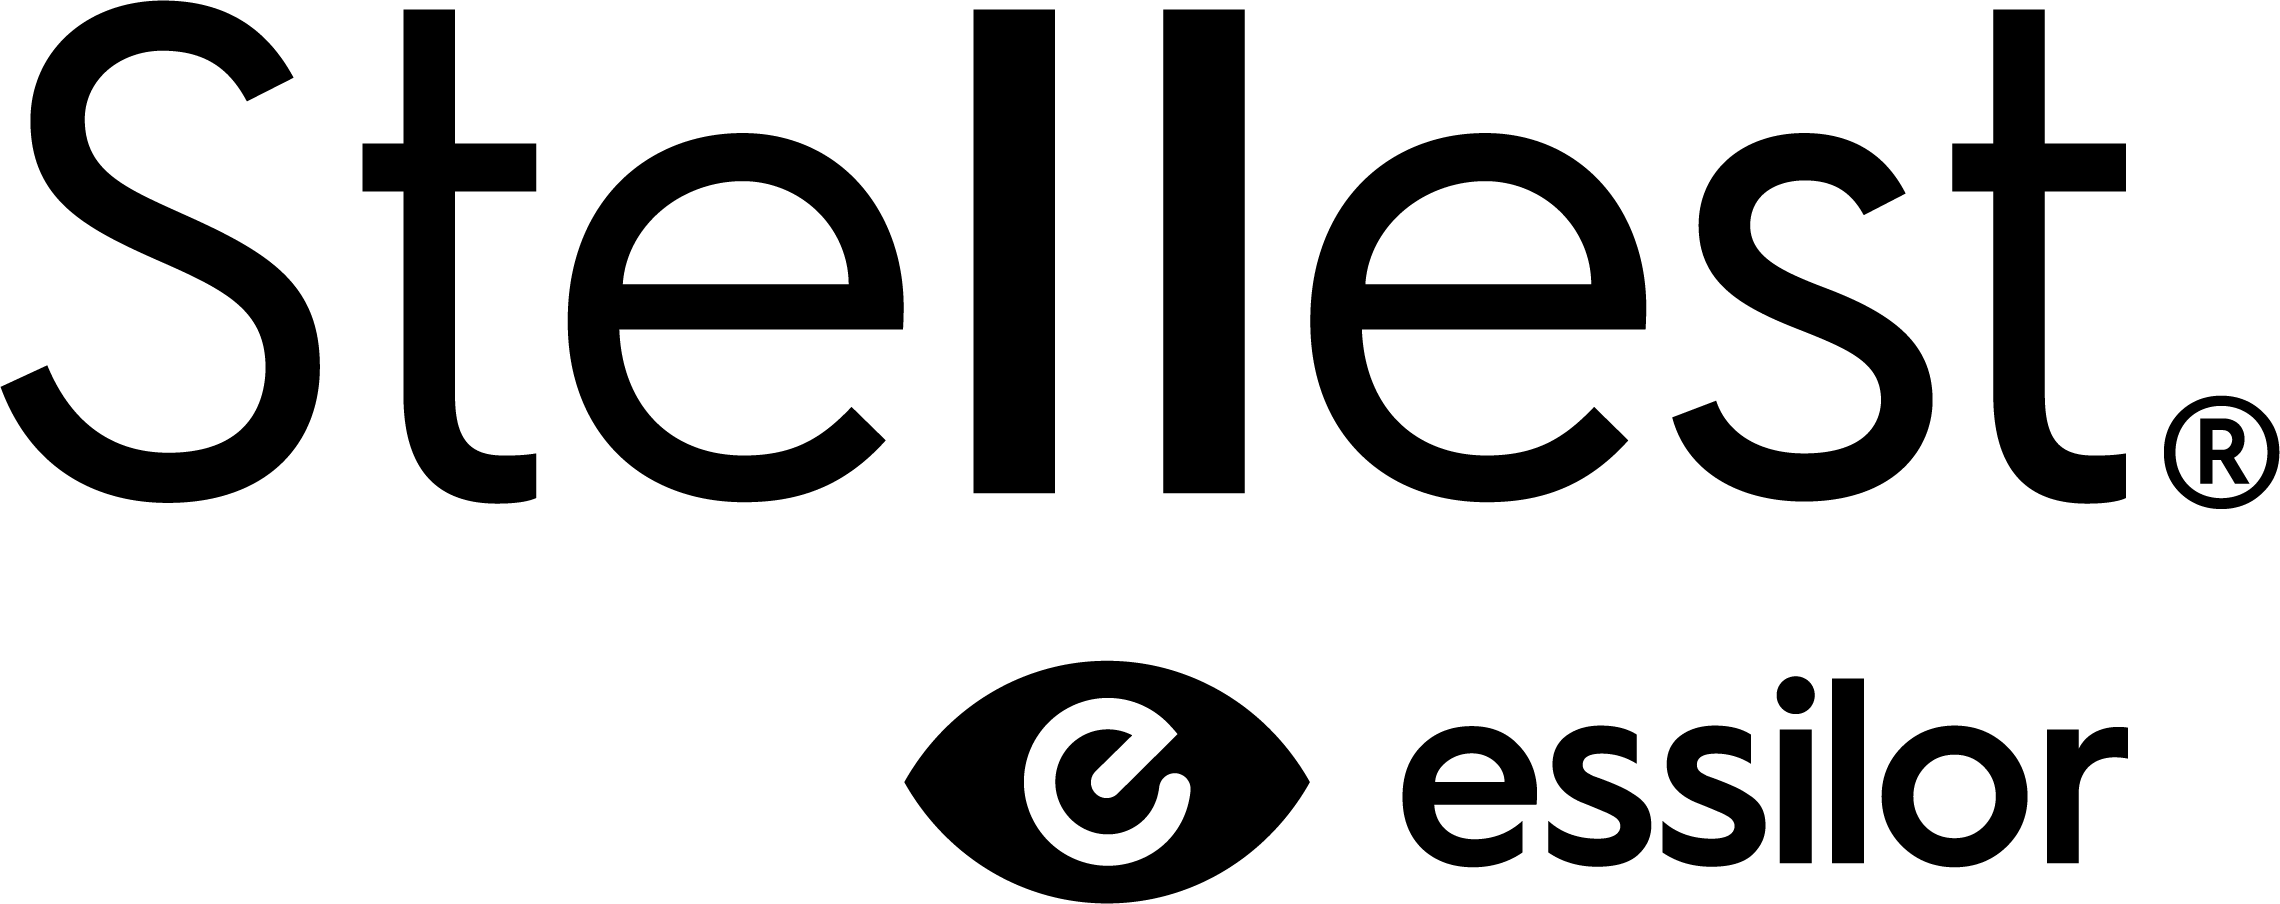 File:Essilor logo.png - Wikipedia